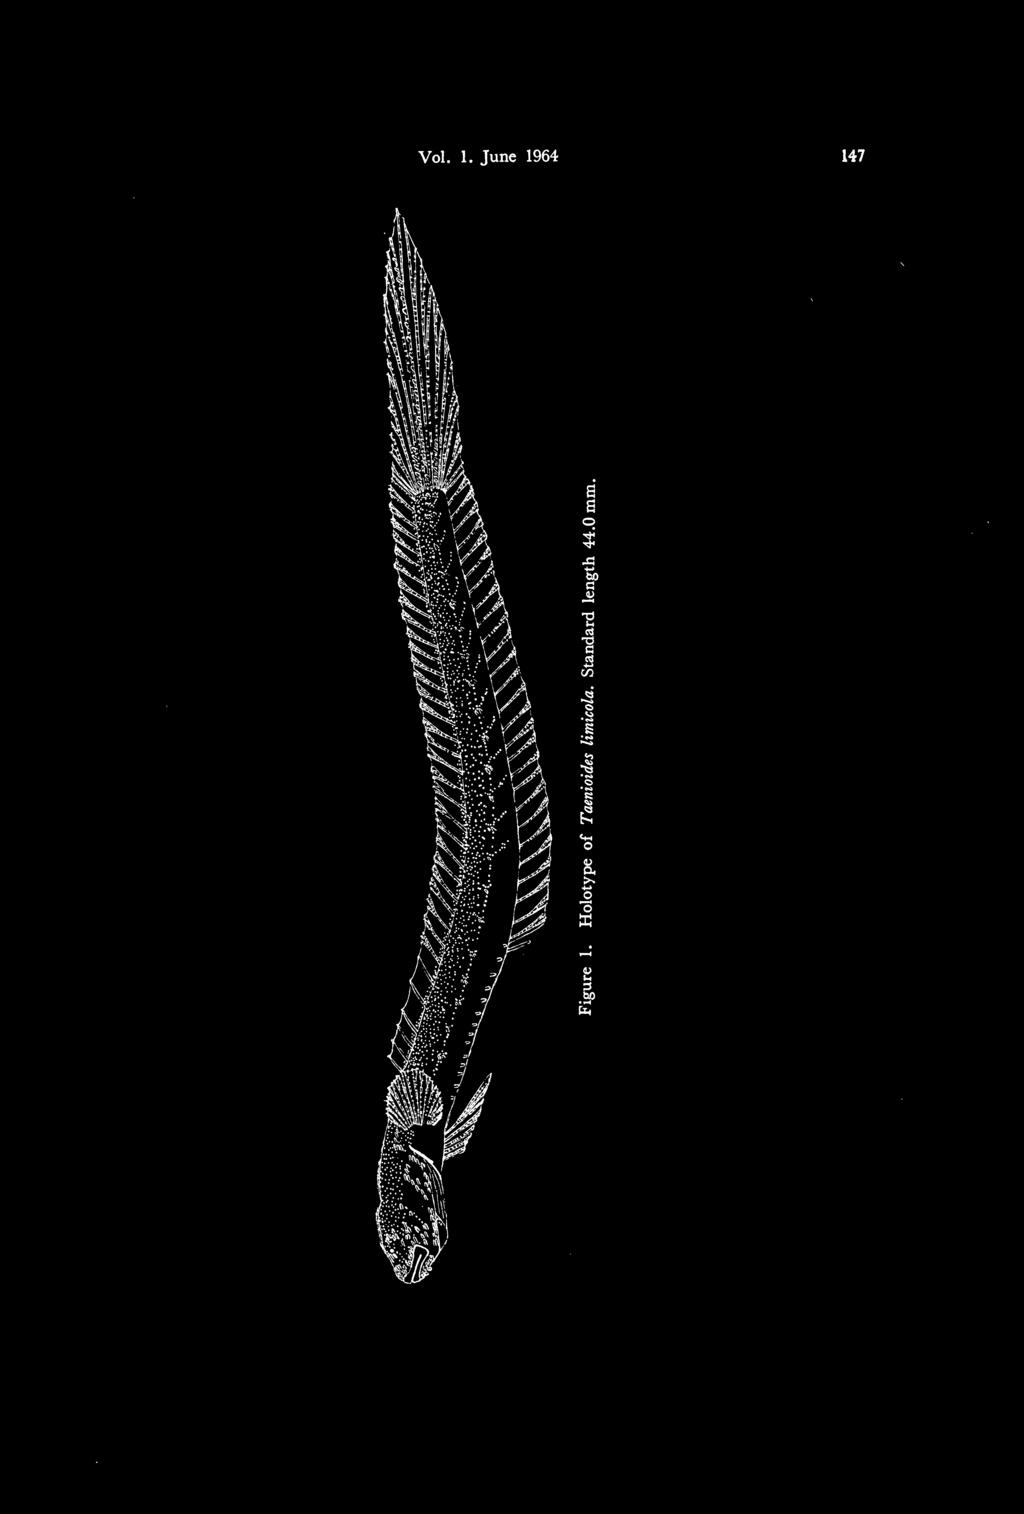 Holotype of Taenioides limicola.